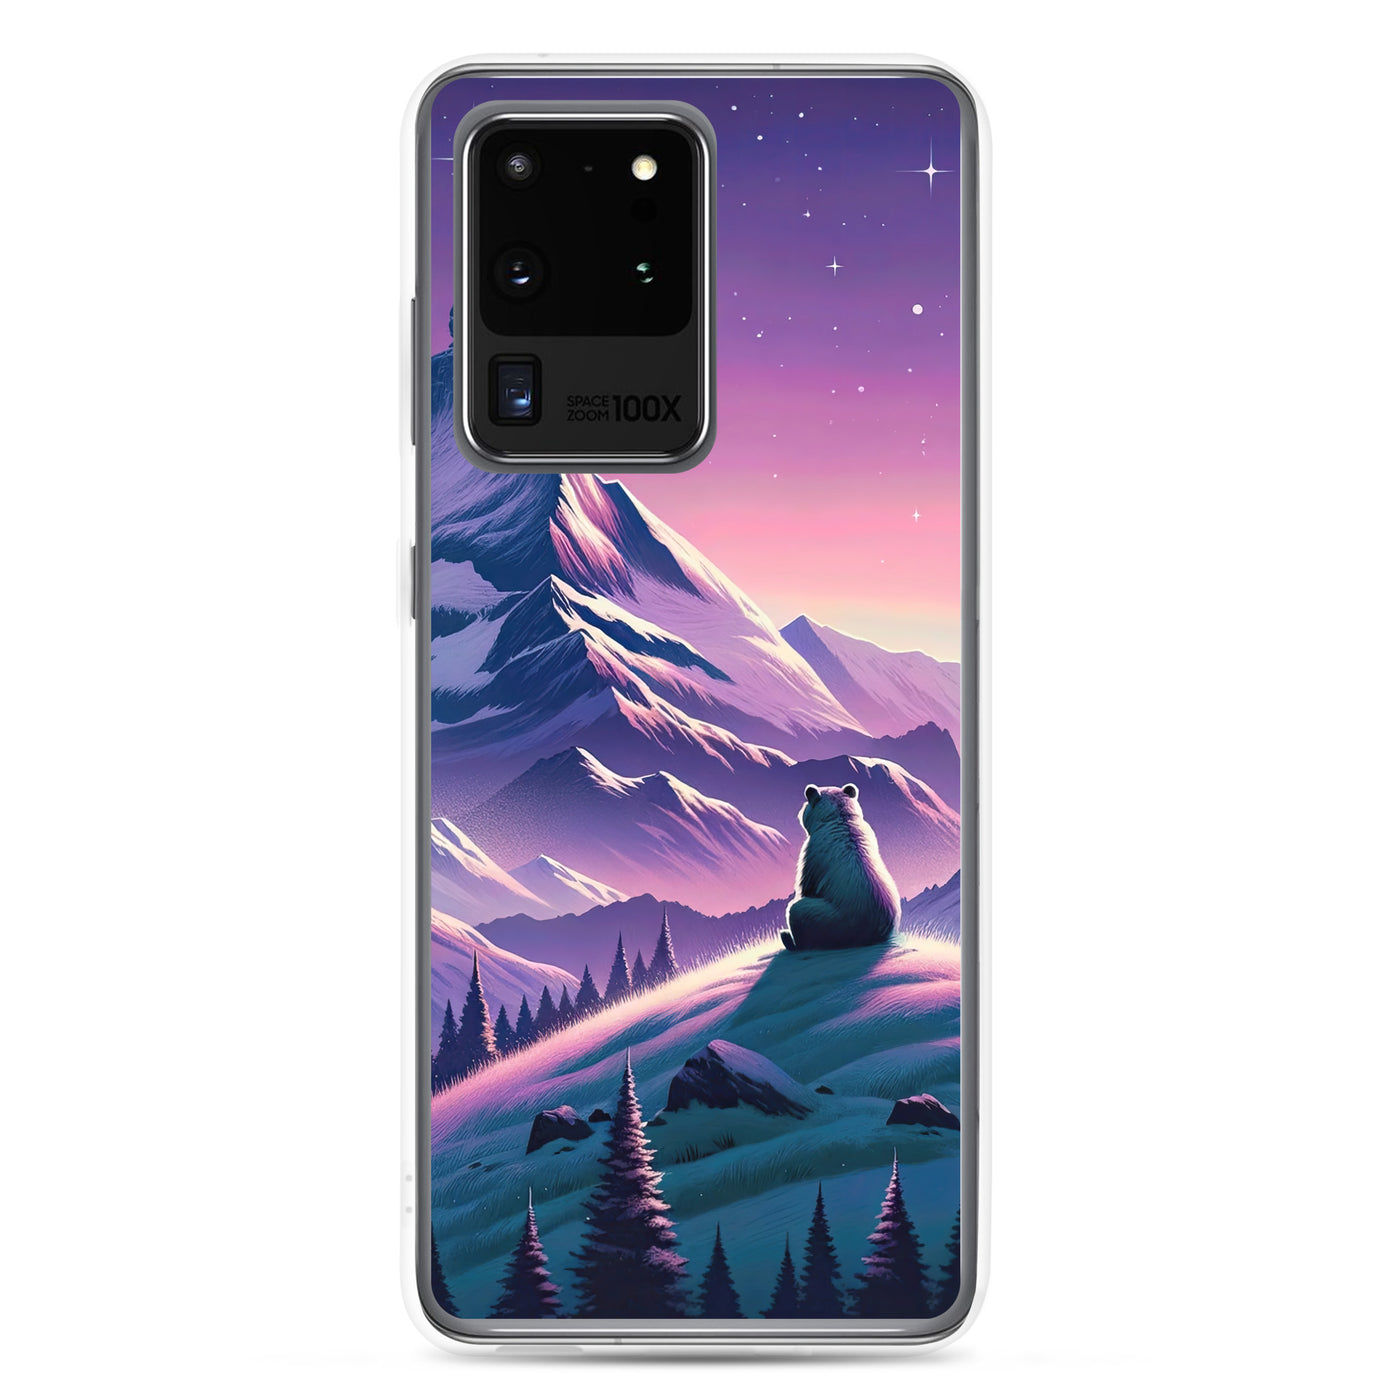 Bezaubernder Alpenabend mit Bär, lavendel-rosafarbener Himmel (AN) - Samsung Schutzhülle (durchsichtig) xxx yyy zzz Samsung Galaxy S20 Ultra